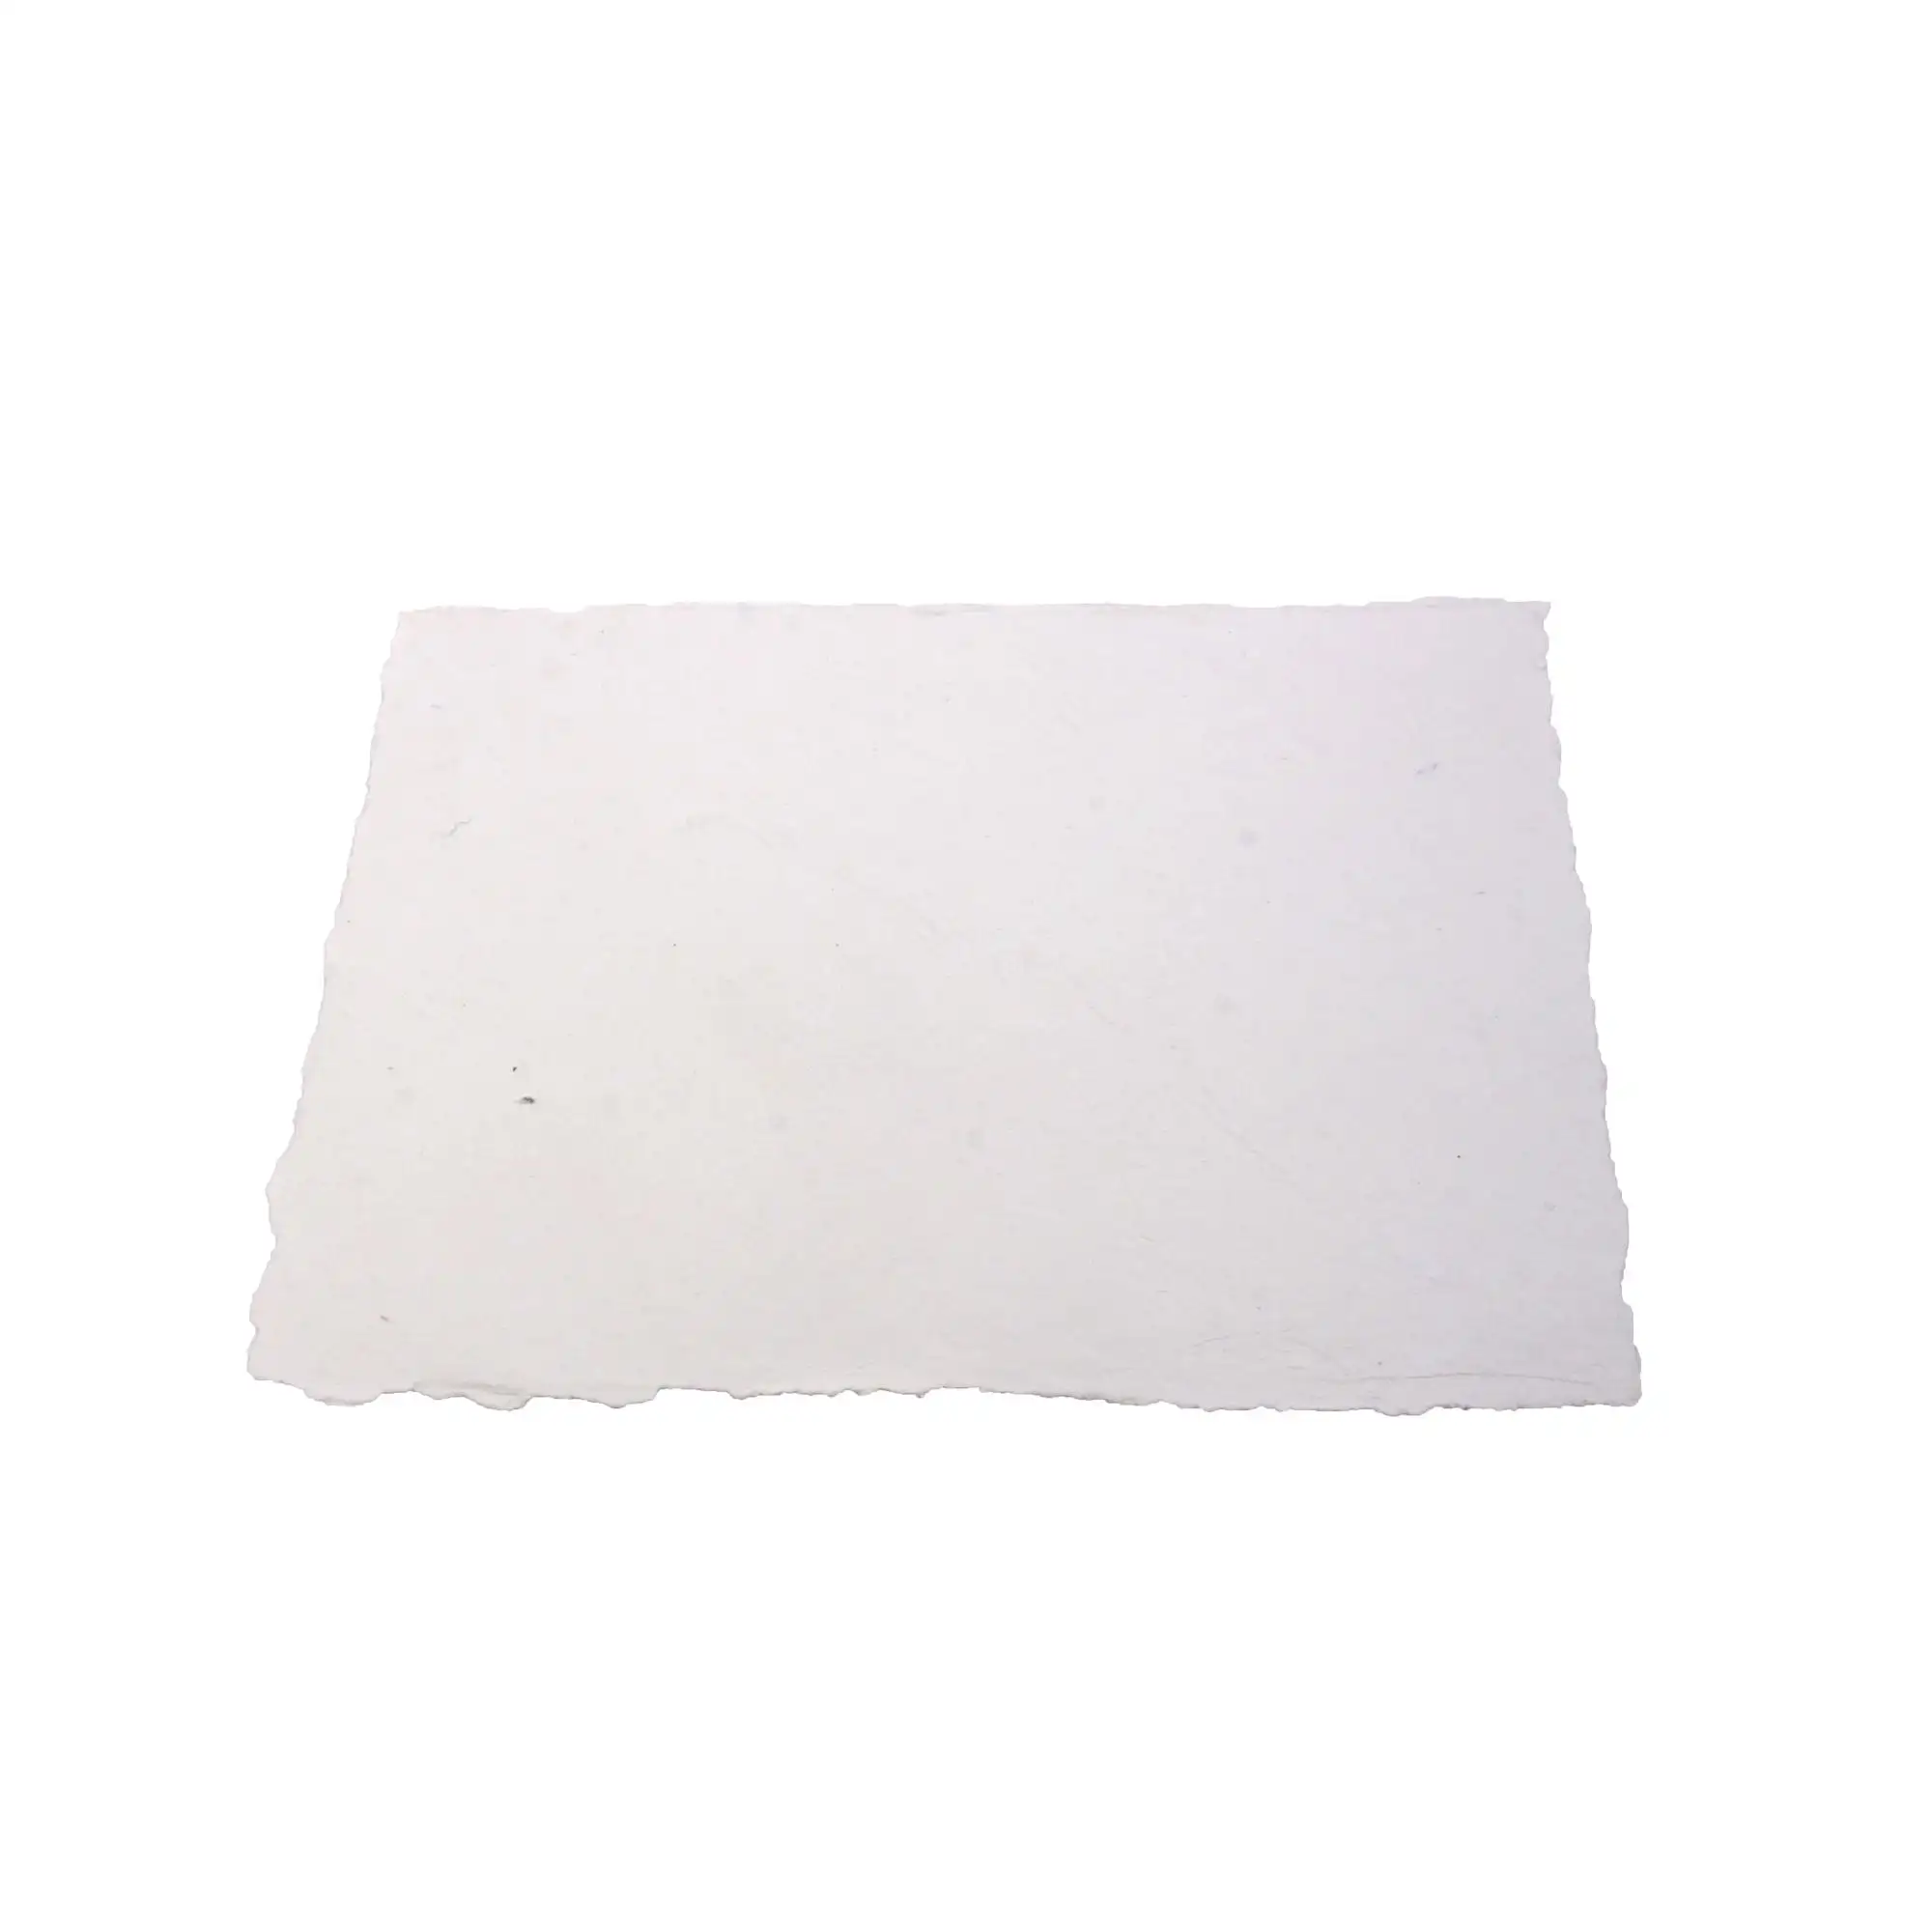 Deckle Edge Handgemaakt Papier Blanco Pagina Voor Uitnodiging Brievenrees Stationair Papier Gerecycled Katoen Lap Wit Papier Met Verbrande Rand